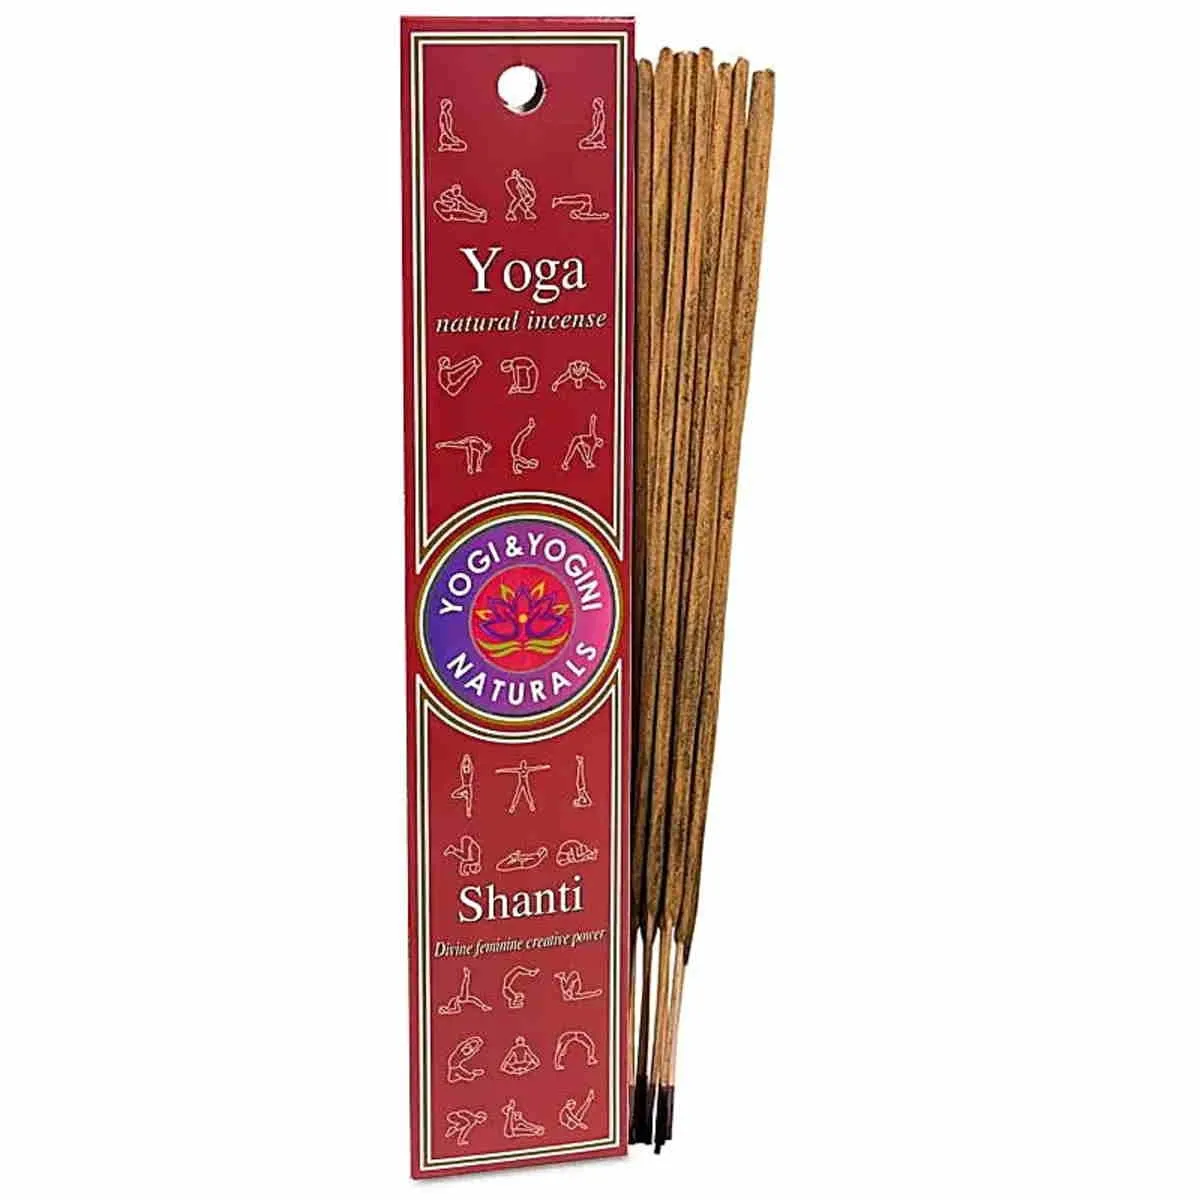 Incense sticks Yoga Shanti Sandalwood fragrance